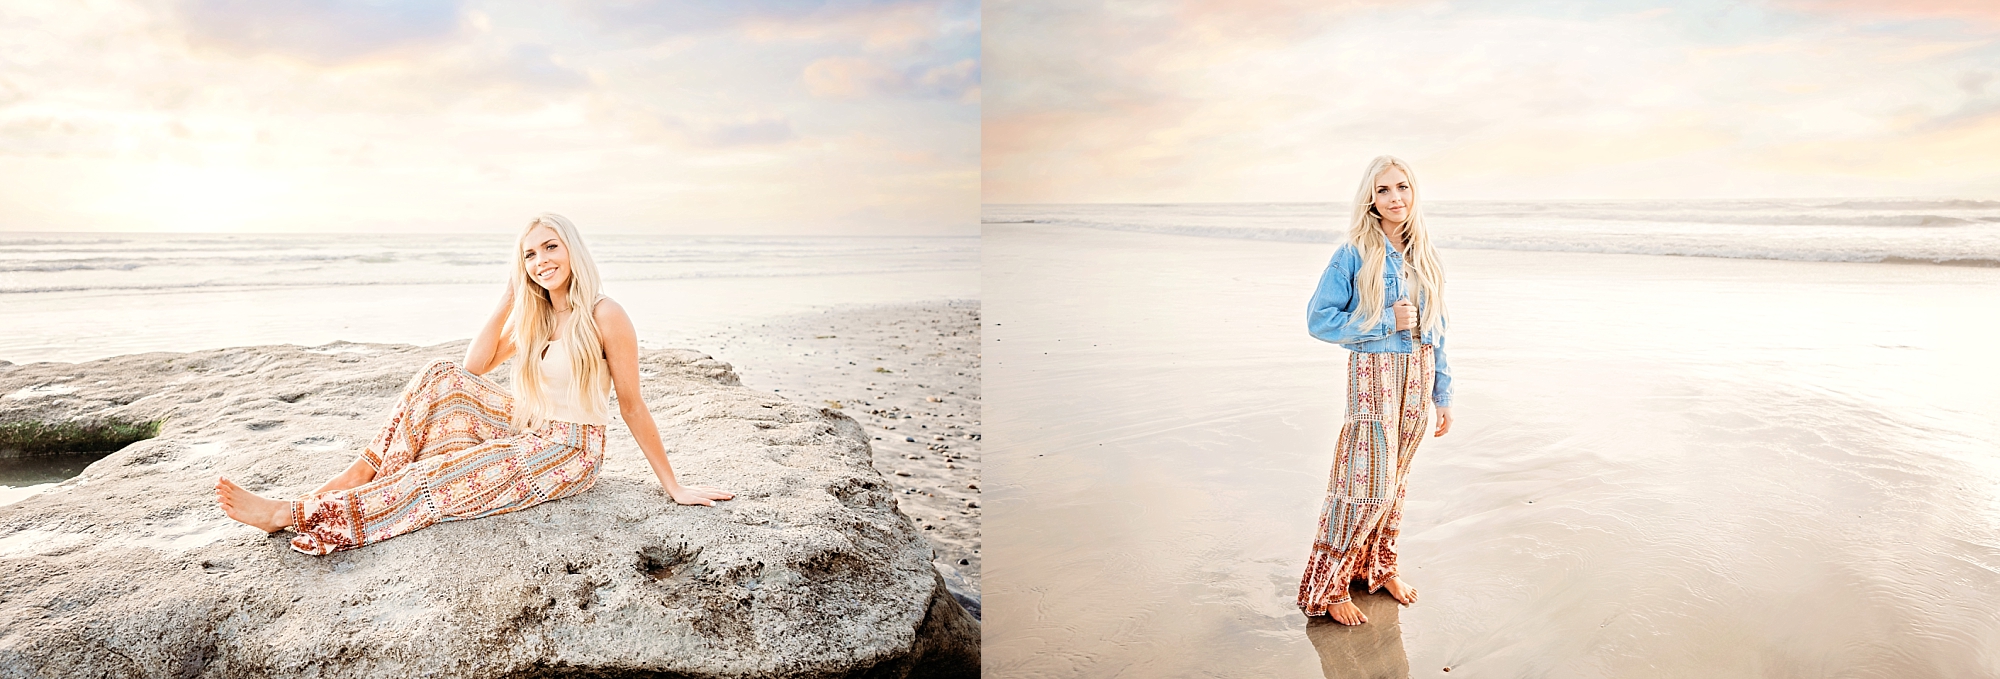 Senior Pictures at the Beach | Solana Beach